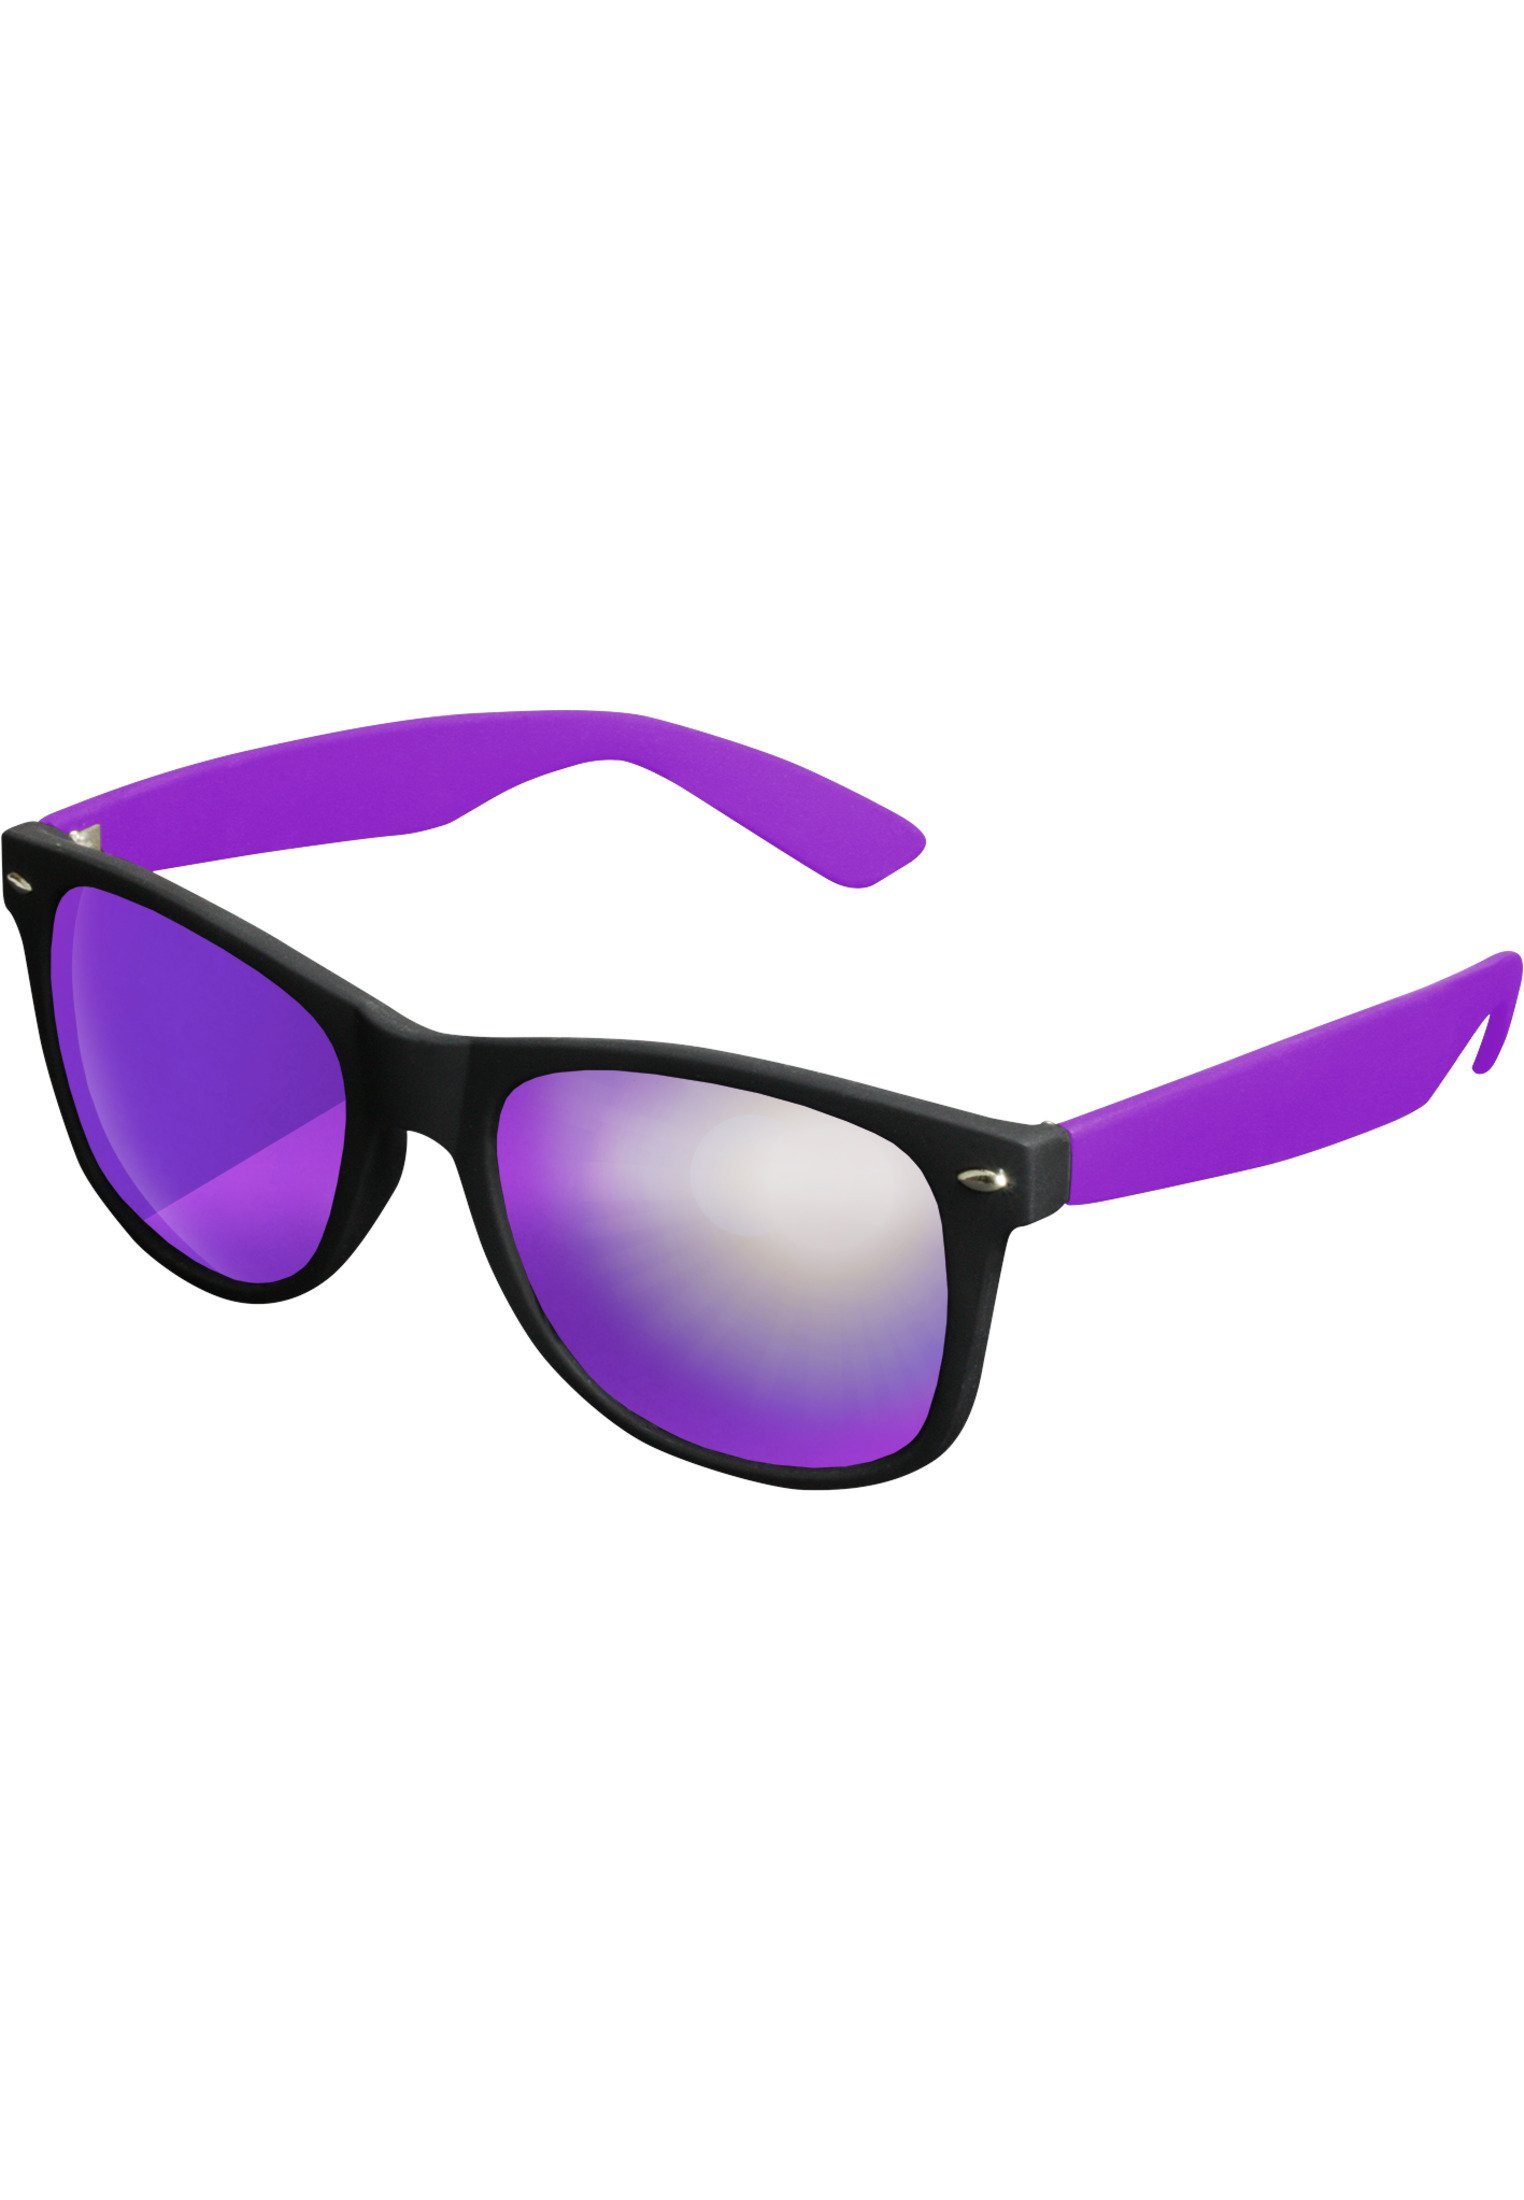 Sunglasses Likoma MSTRDS Sonnenbrille blk/pur/pur Mirror Accessoires